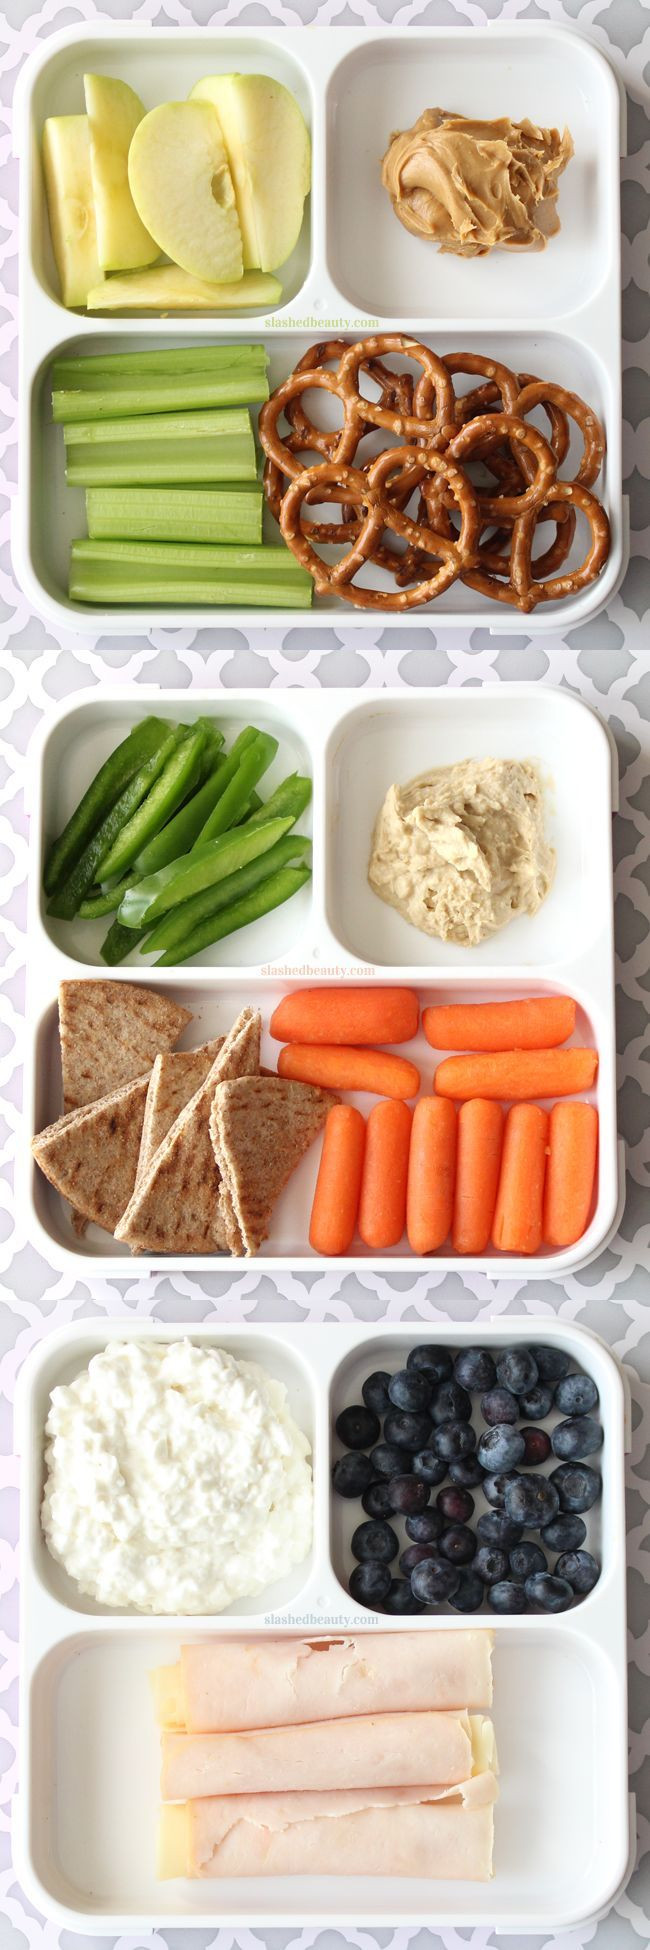 Healthy Quick Snacks
 Best 25 Healthy snacks ideas on Pinterest